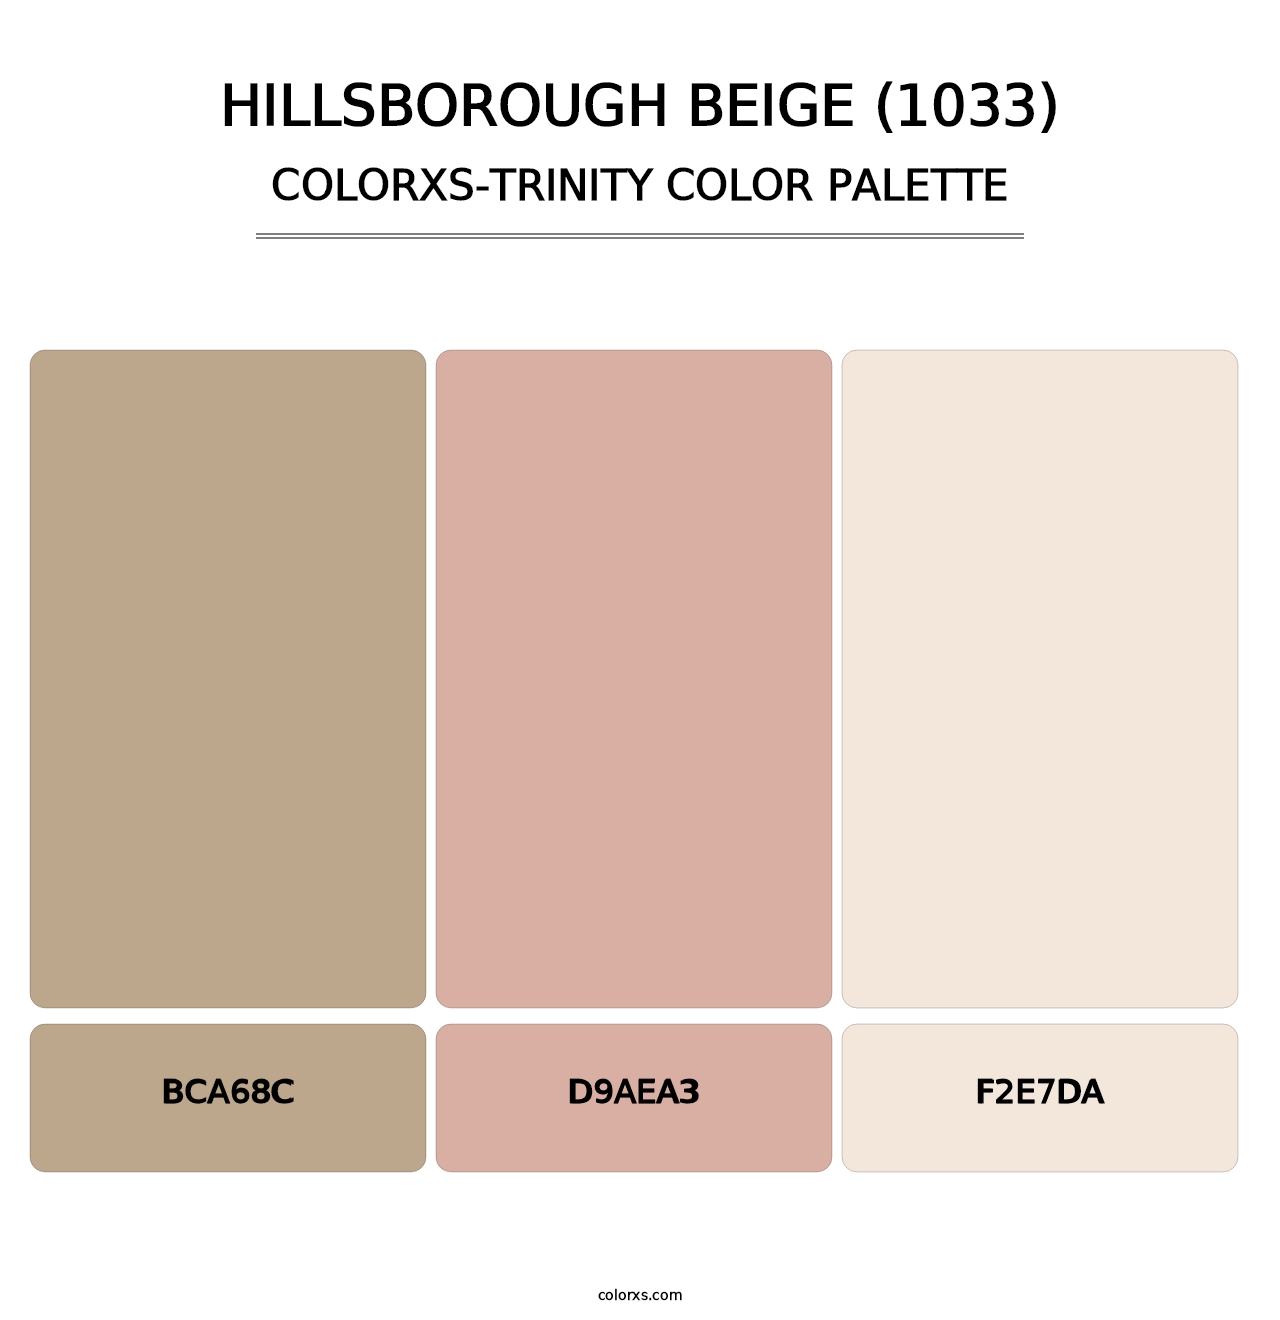 Hillsborough Beige (1033) - Colorxs Trinity Palette